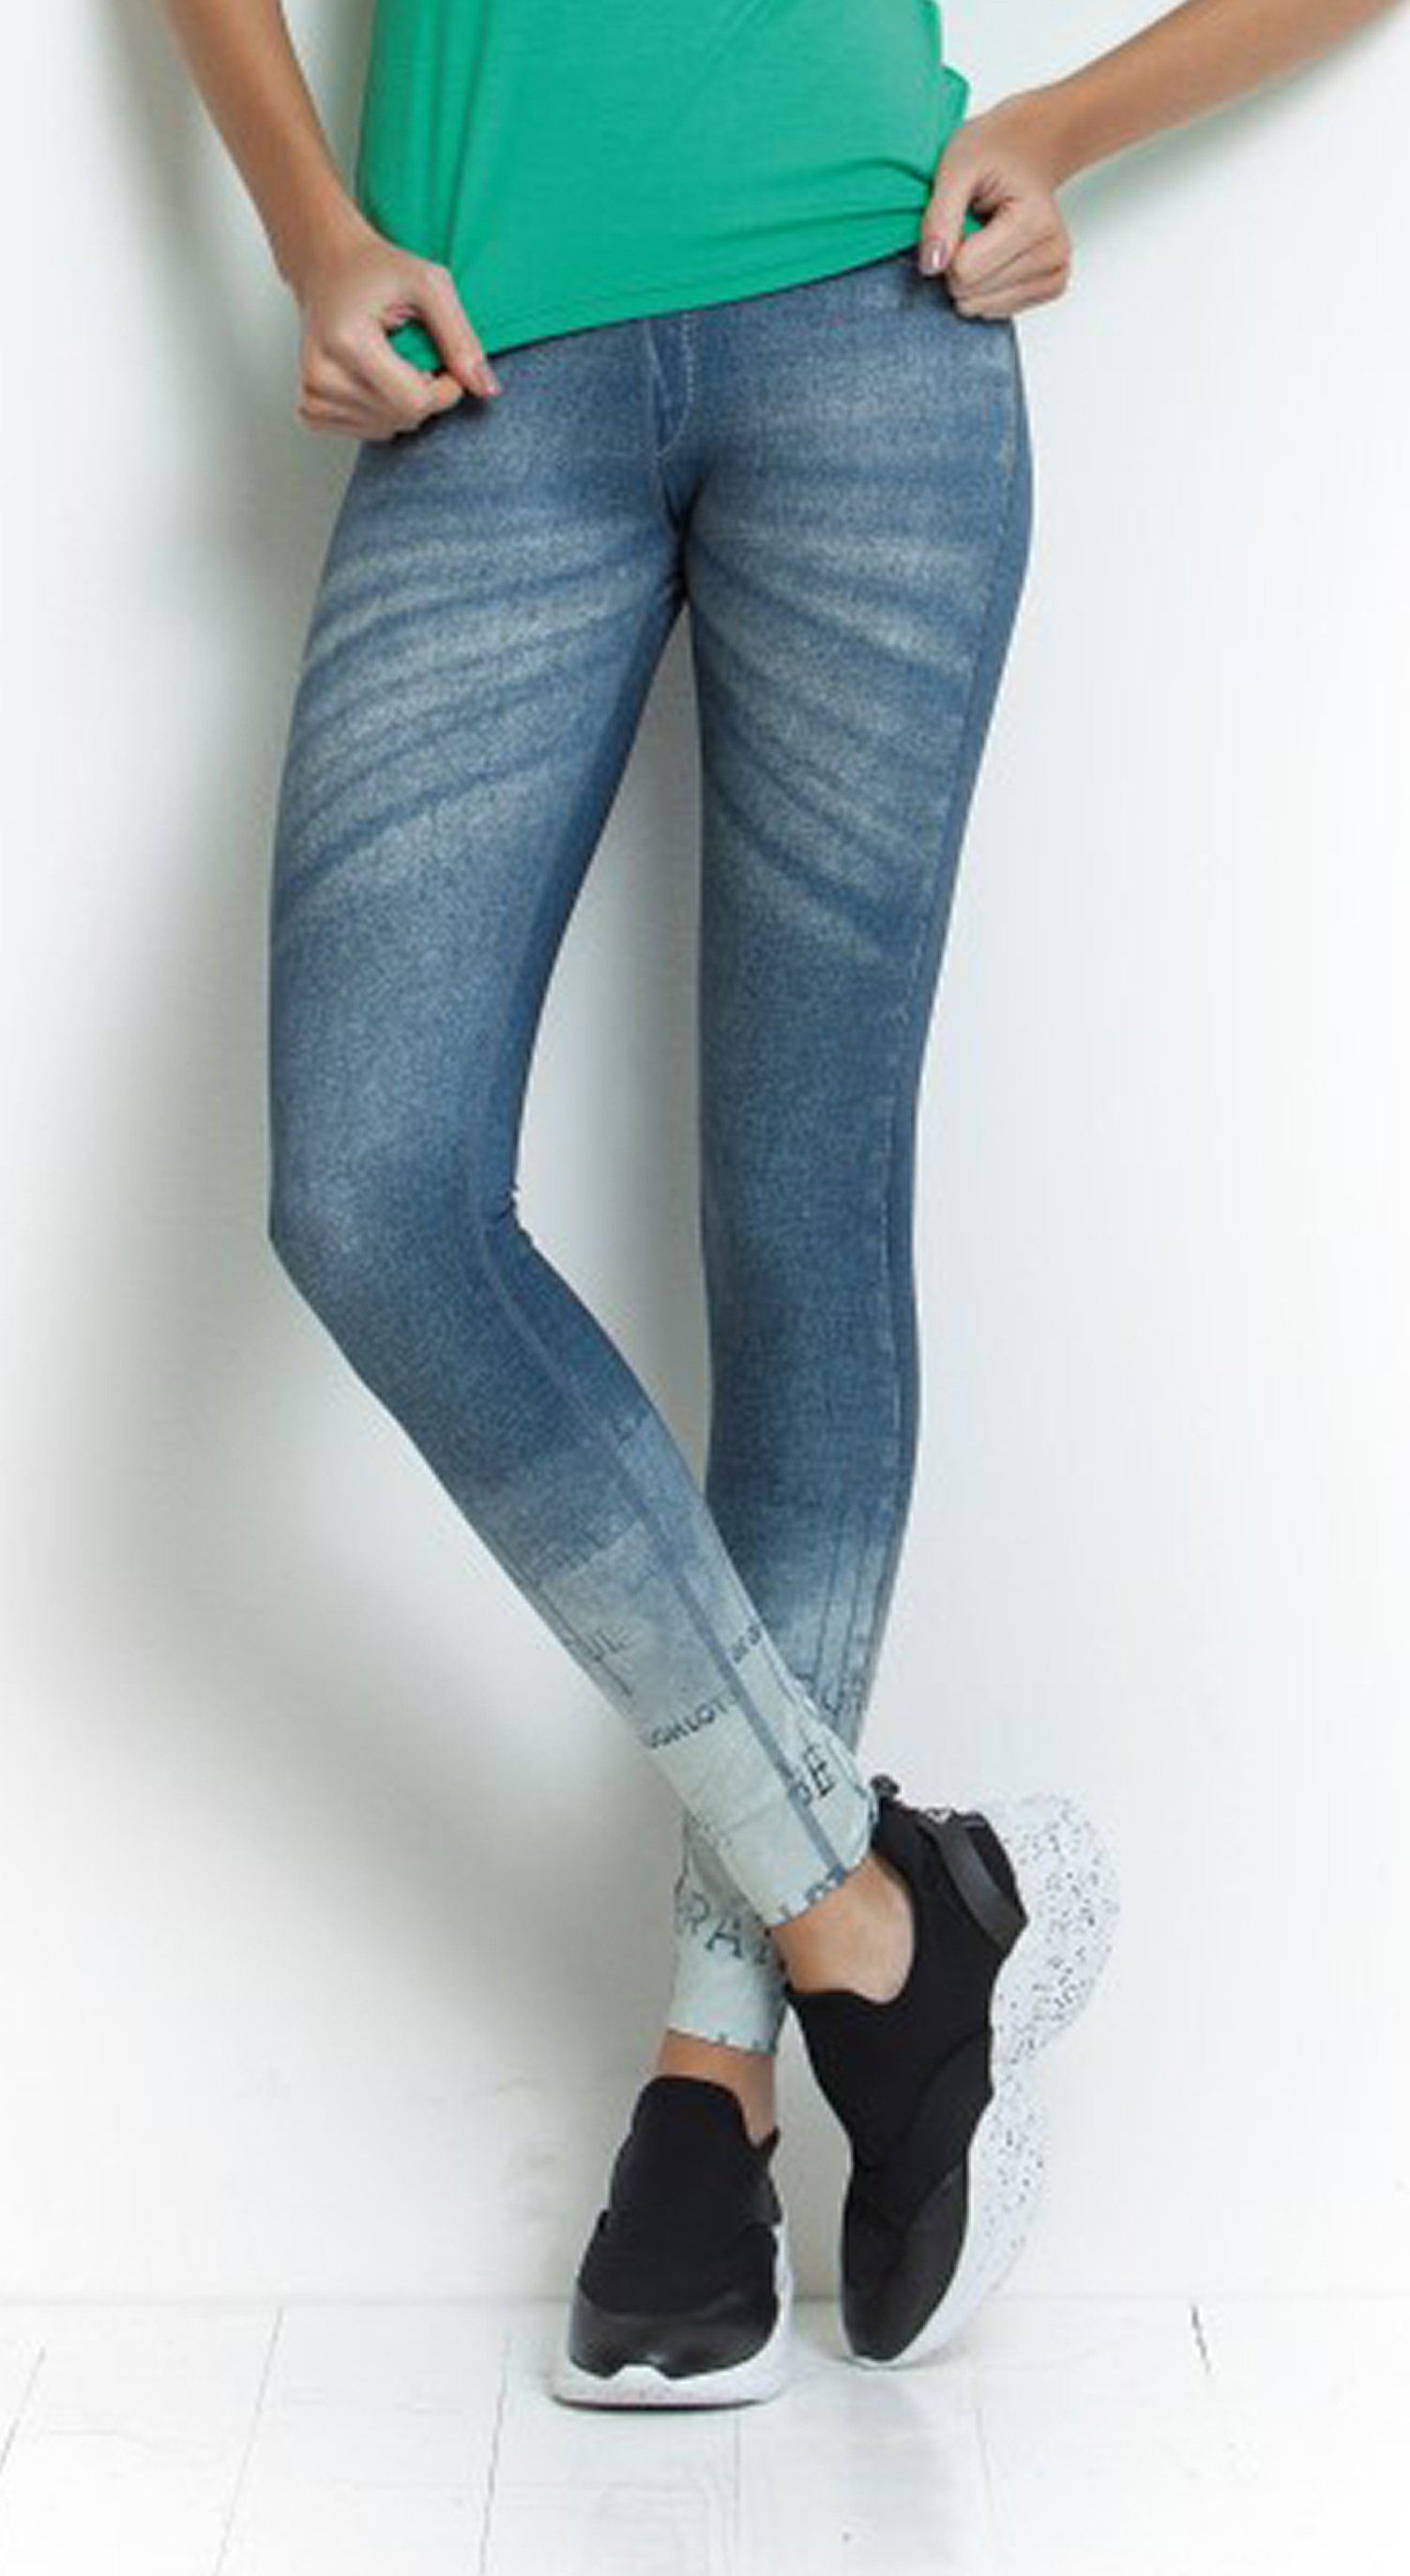 Brazilian Reversible | Print Shop Top | Sublime Rio Grateful Legging Fake Jeans